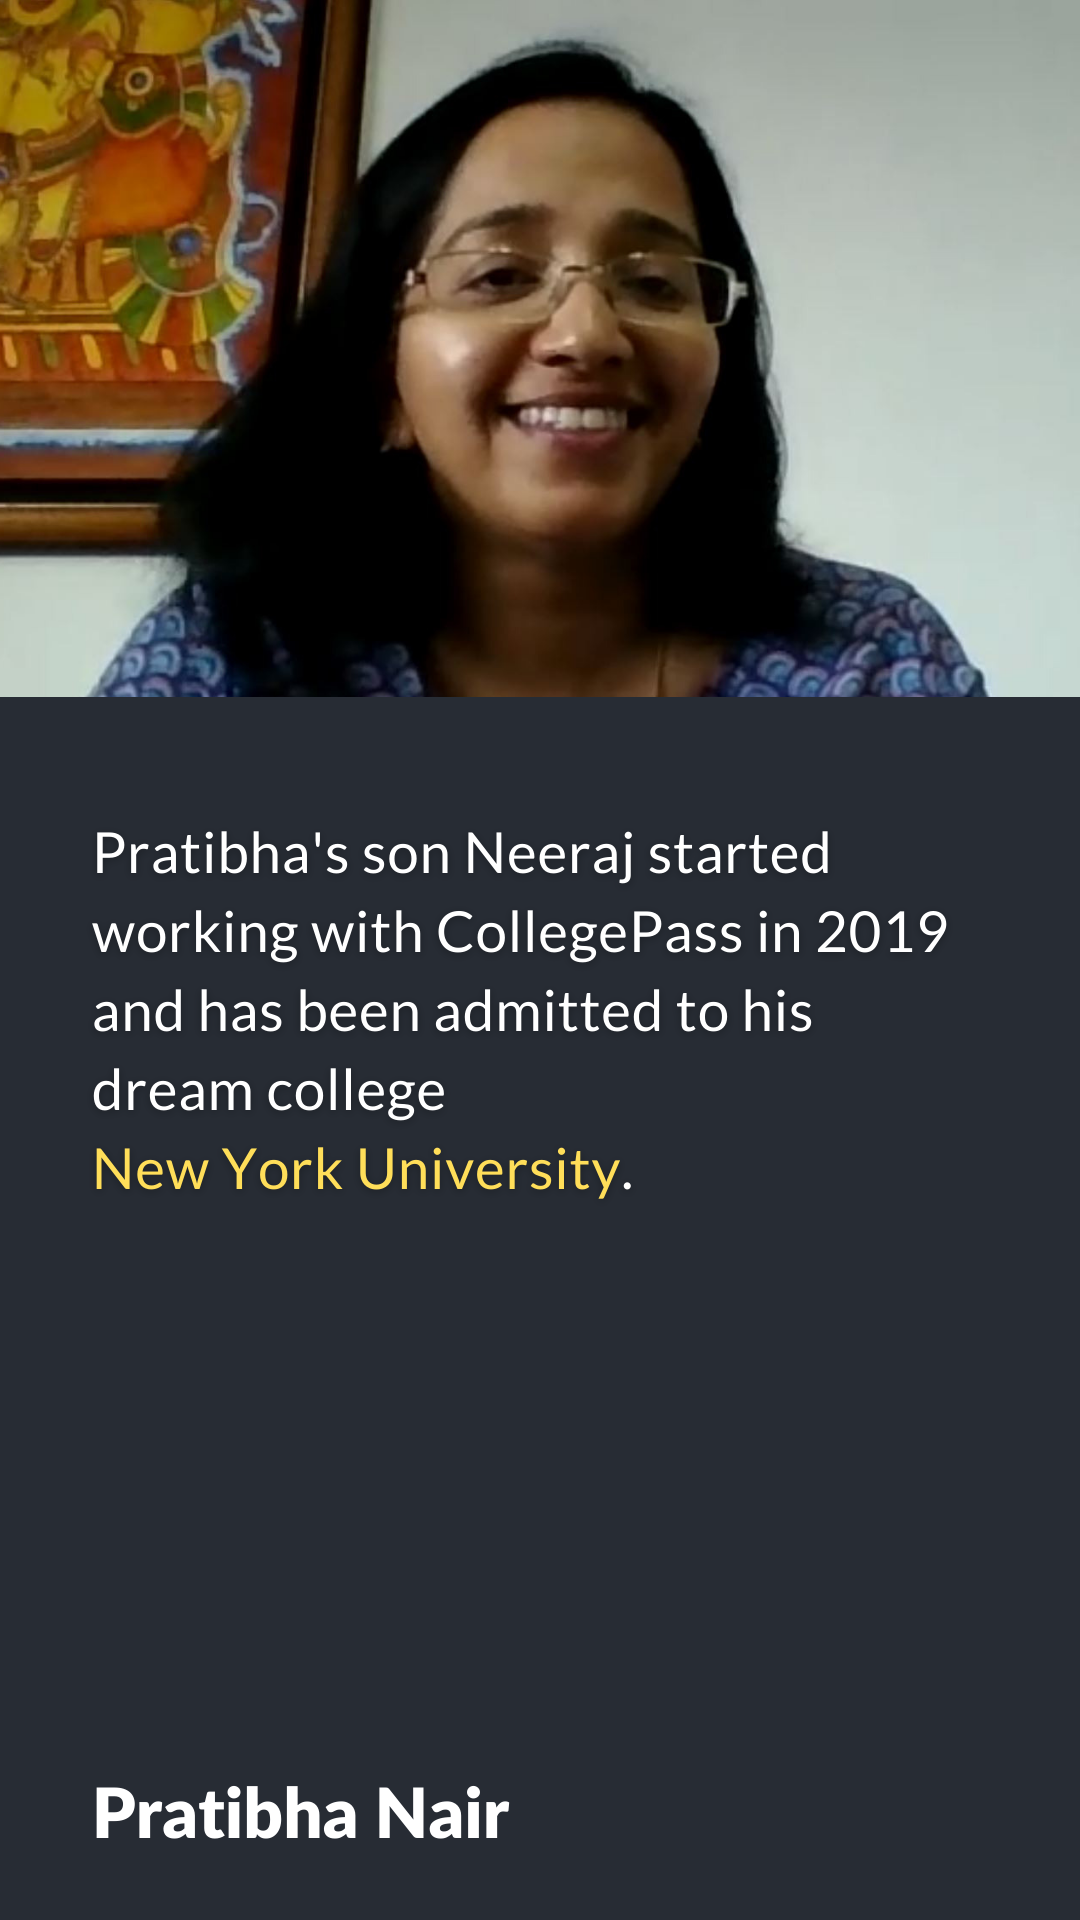 Pratibha's son Niraj got admitted to his dream college, 'New York University.'